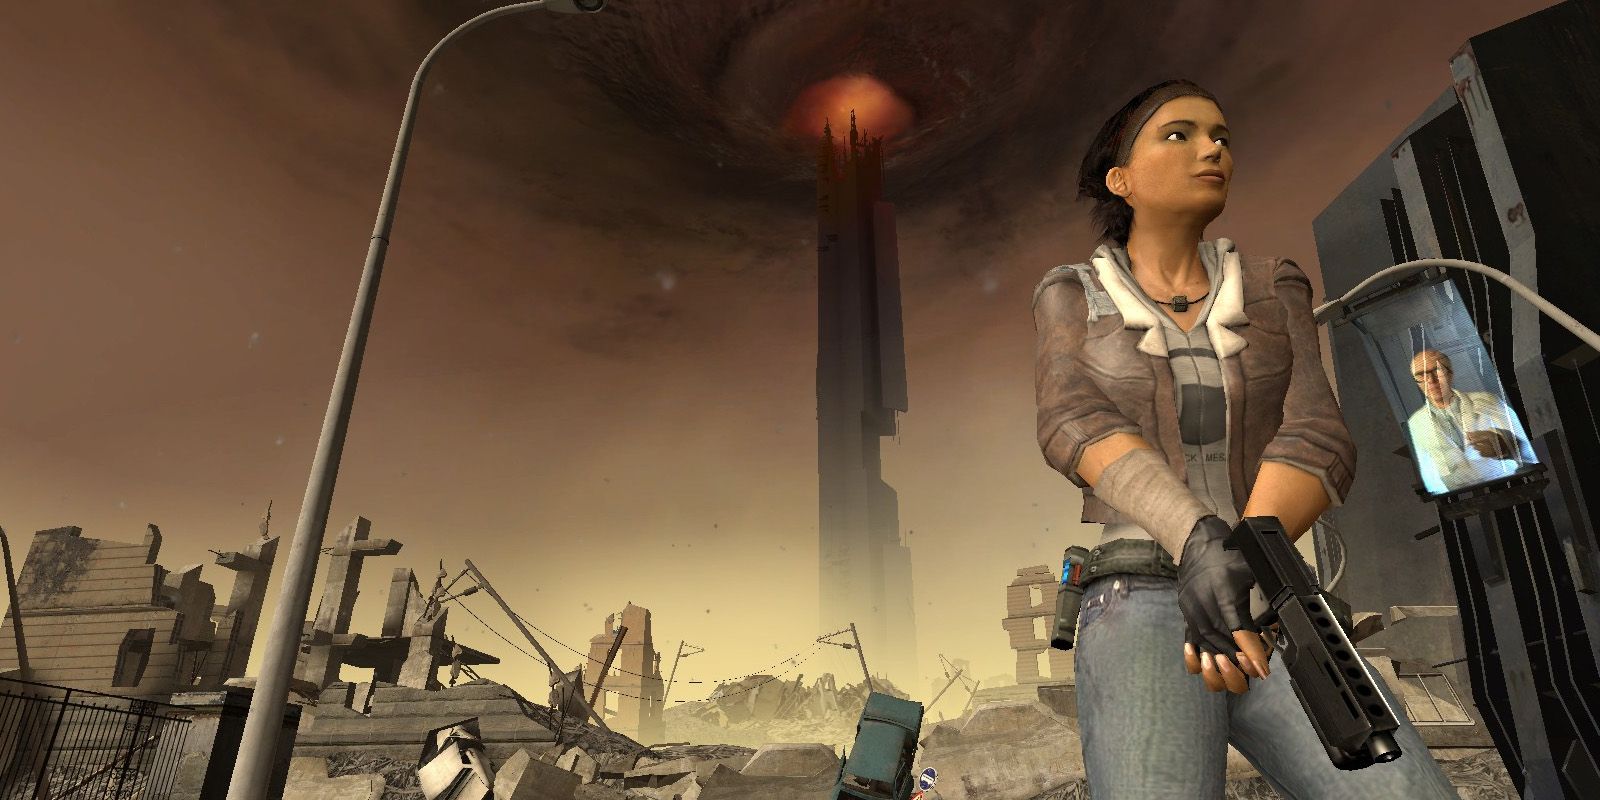 Alyx in front of Citadel in Half Life 2